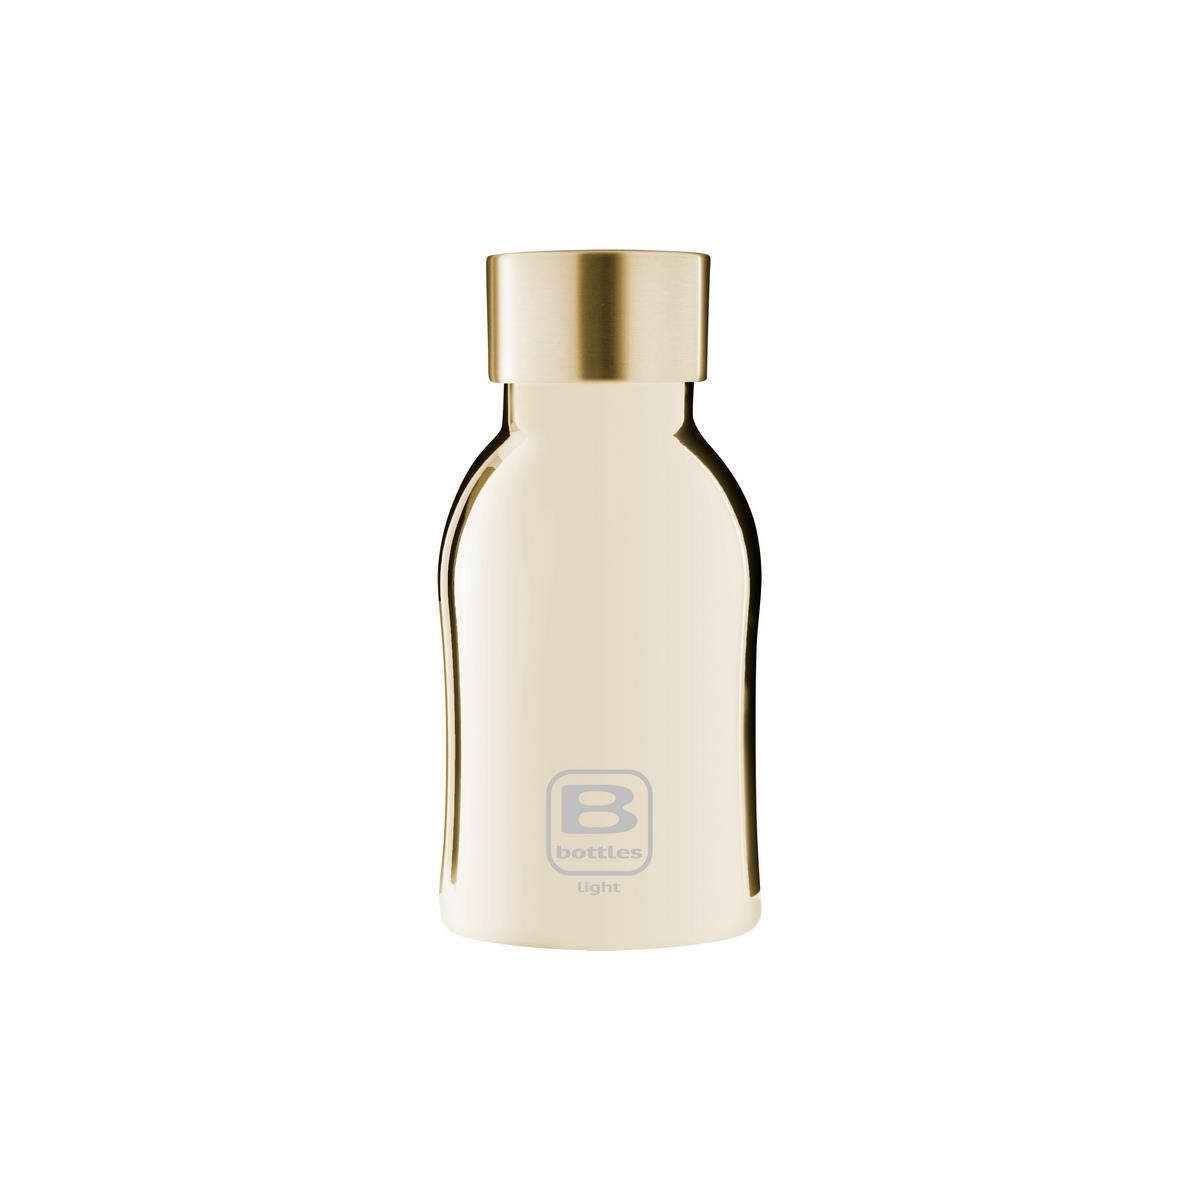 B Bottles Light - Yellow Gold Lux ??- 350 ml - Botella de acero inoxidable 18/10, ultraligera y com